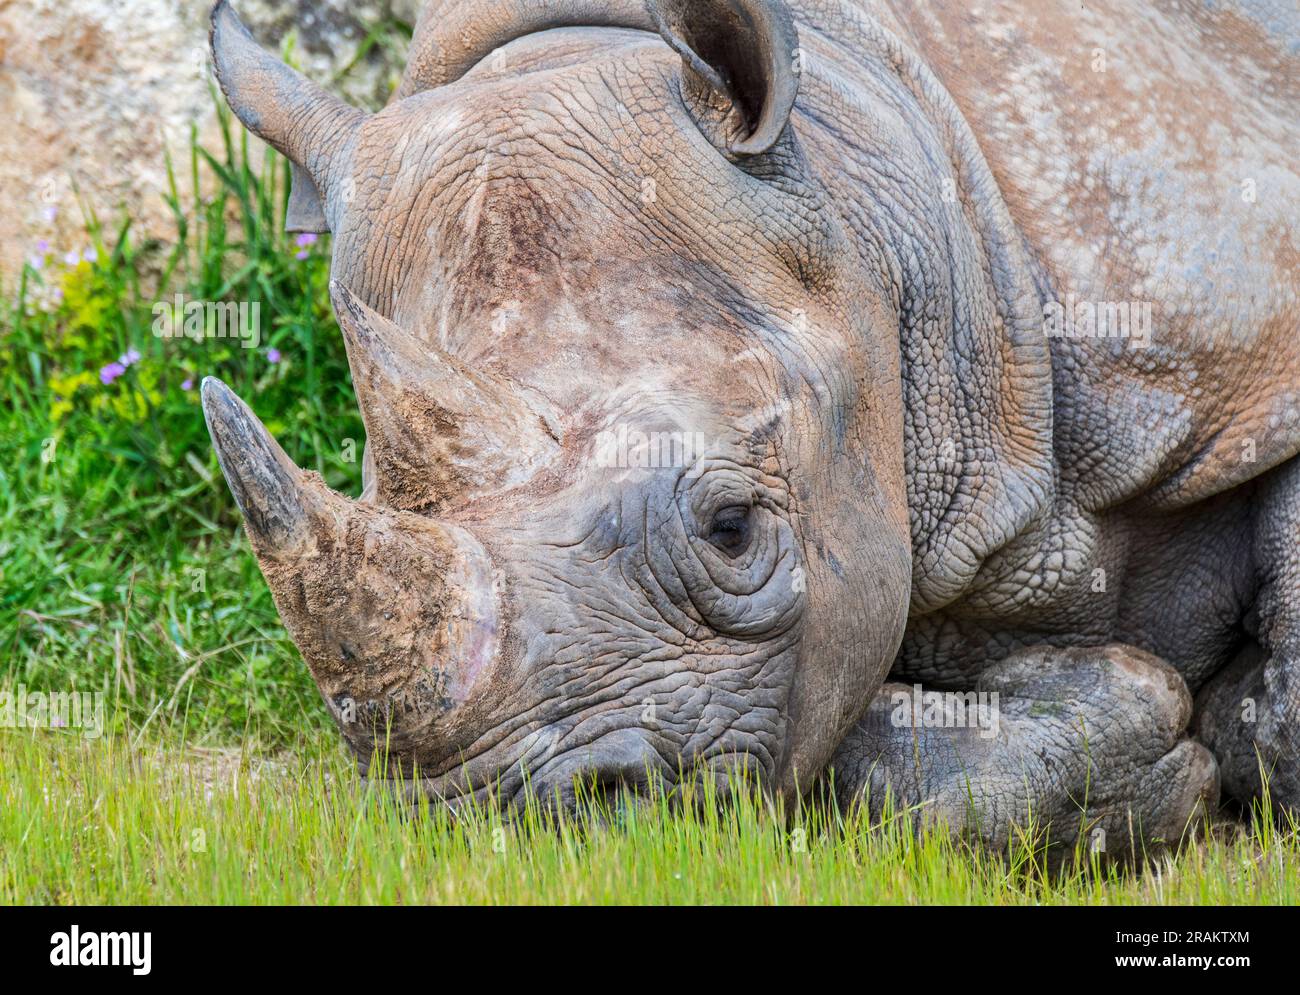 Eastern black rhinoceros / East African black rhinoceros / eastern hook-lipped rhinoceros (Diceros bicornis michaeli), close-up portrait Stock Photo